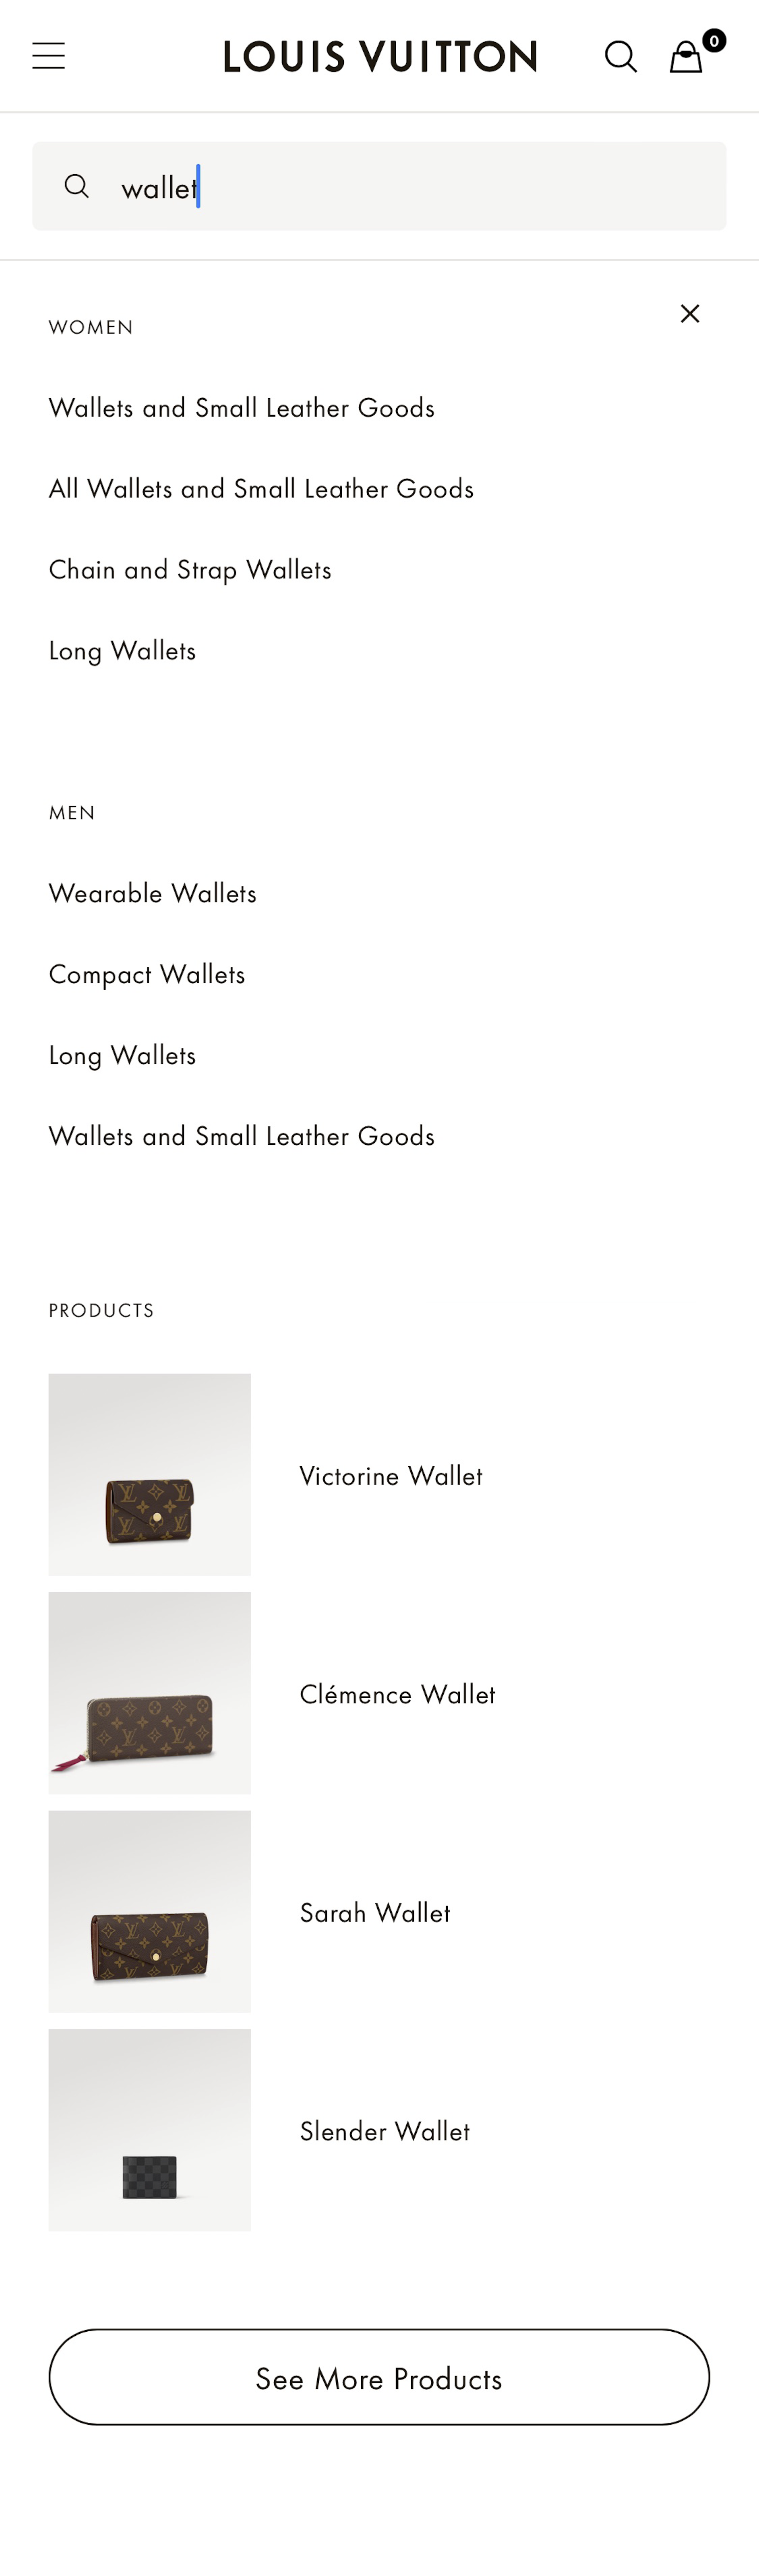 Mobile screenshot of Louis Vuitton